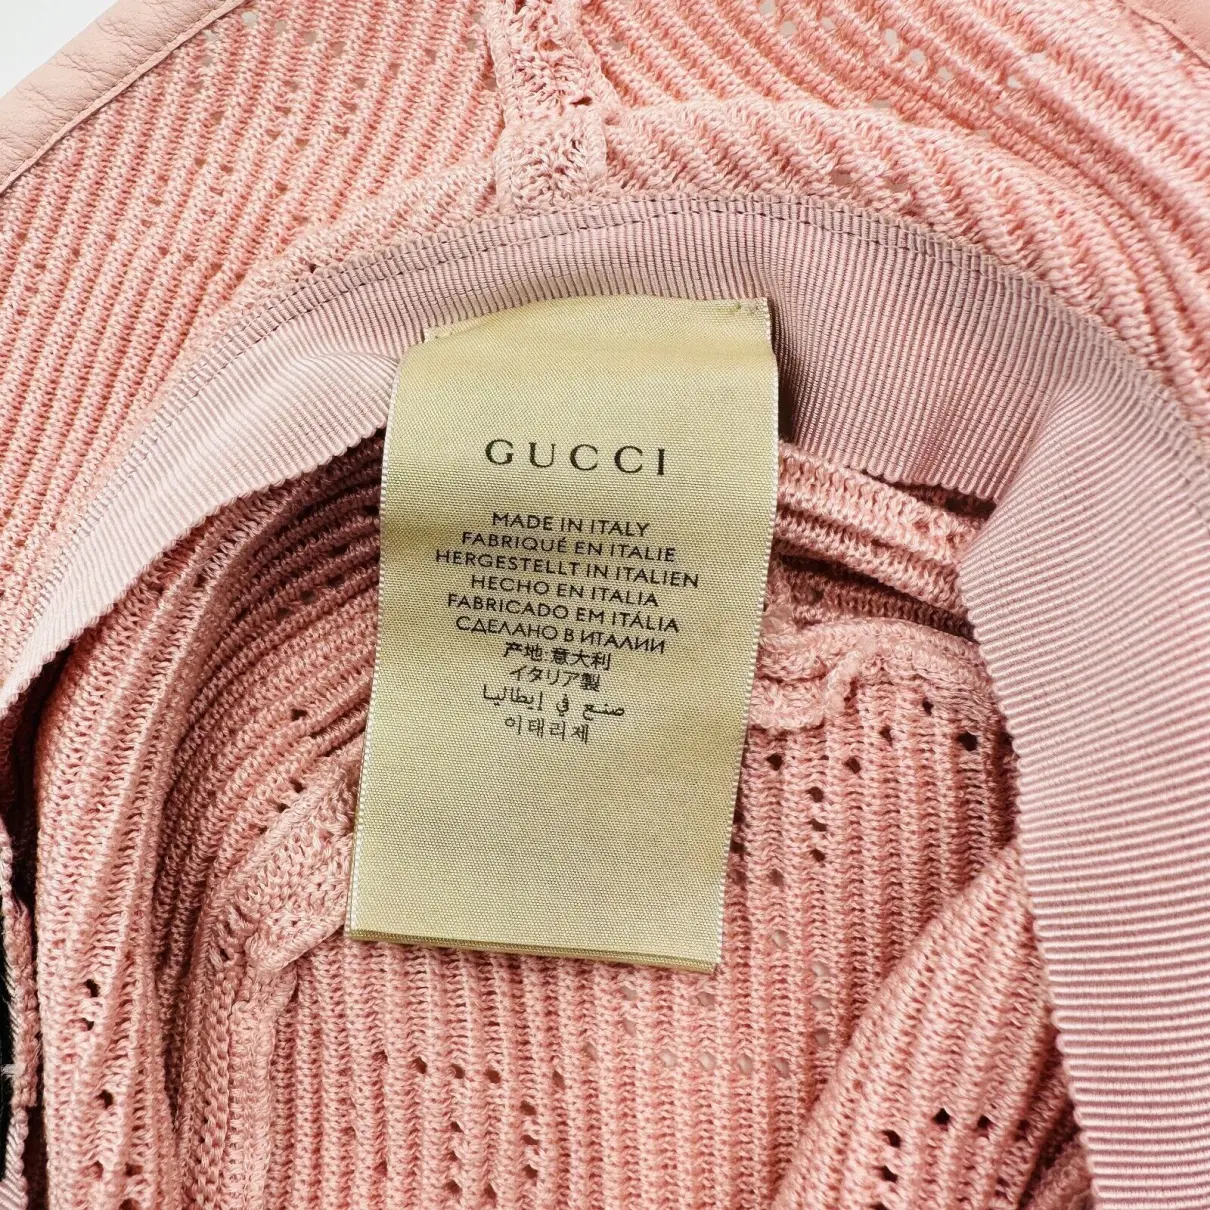 Buy Gucci Panama online